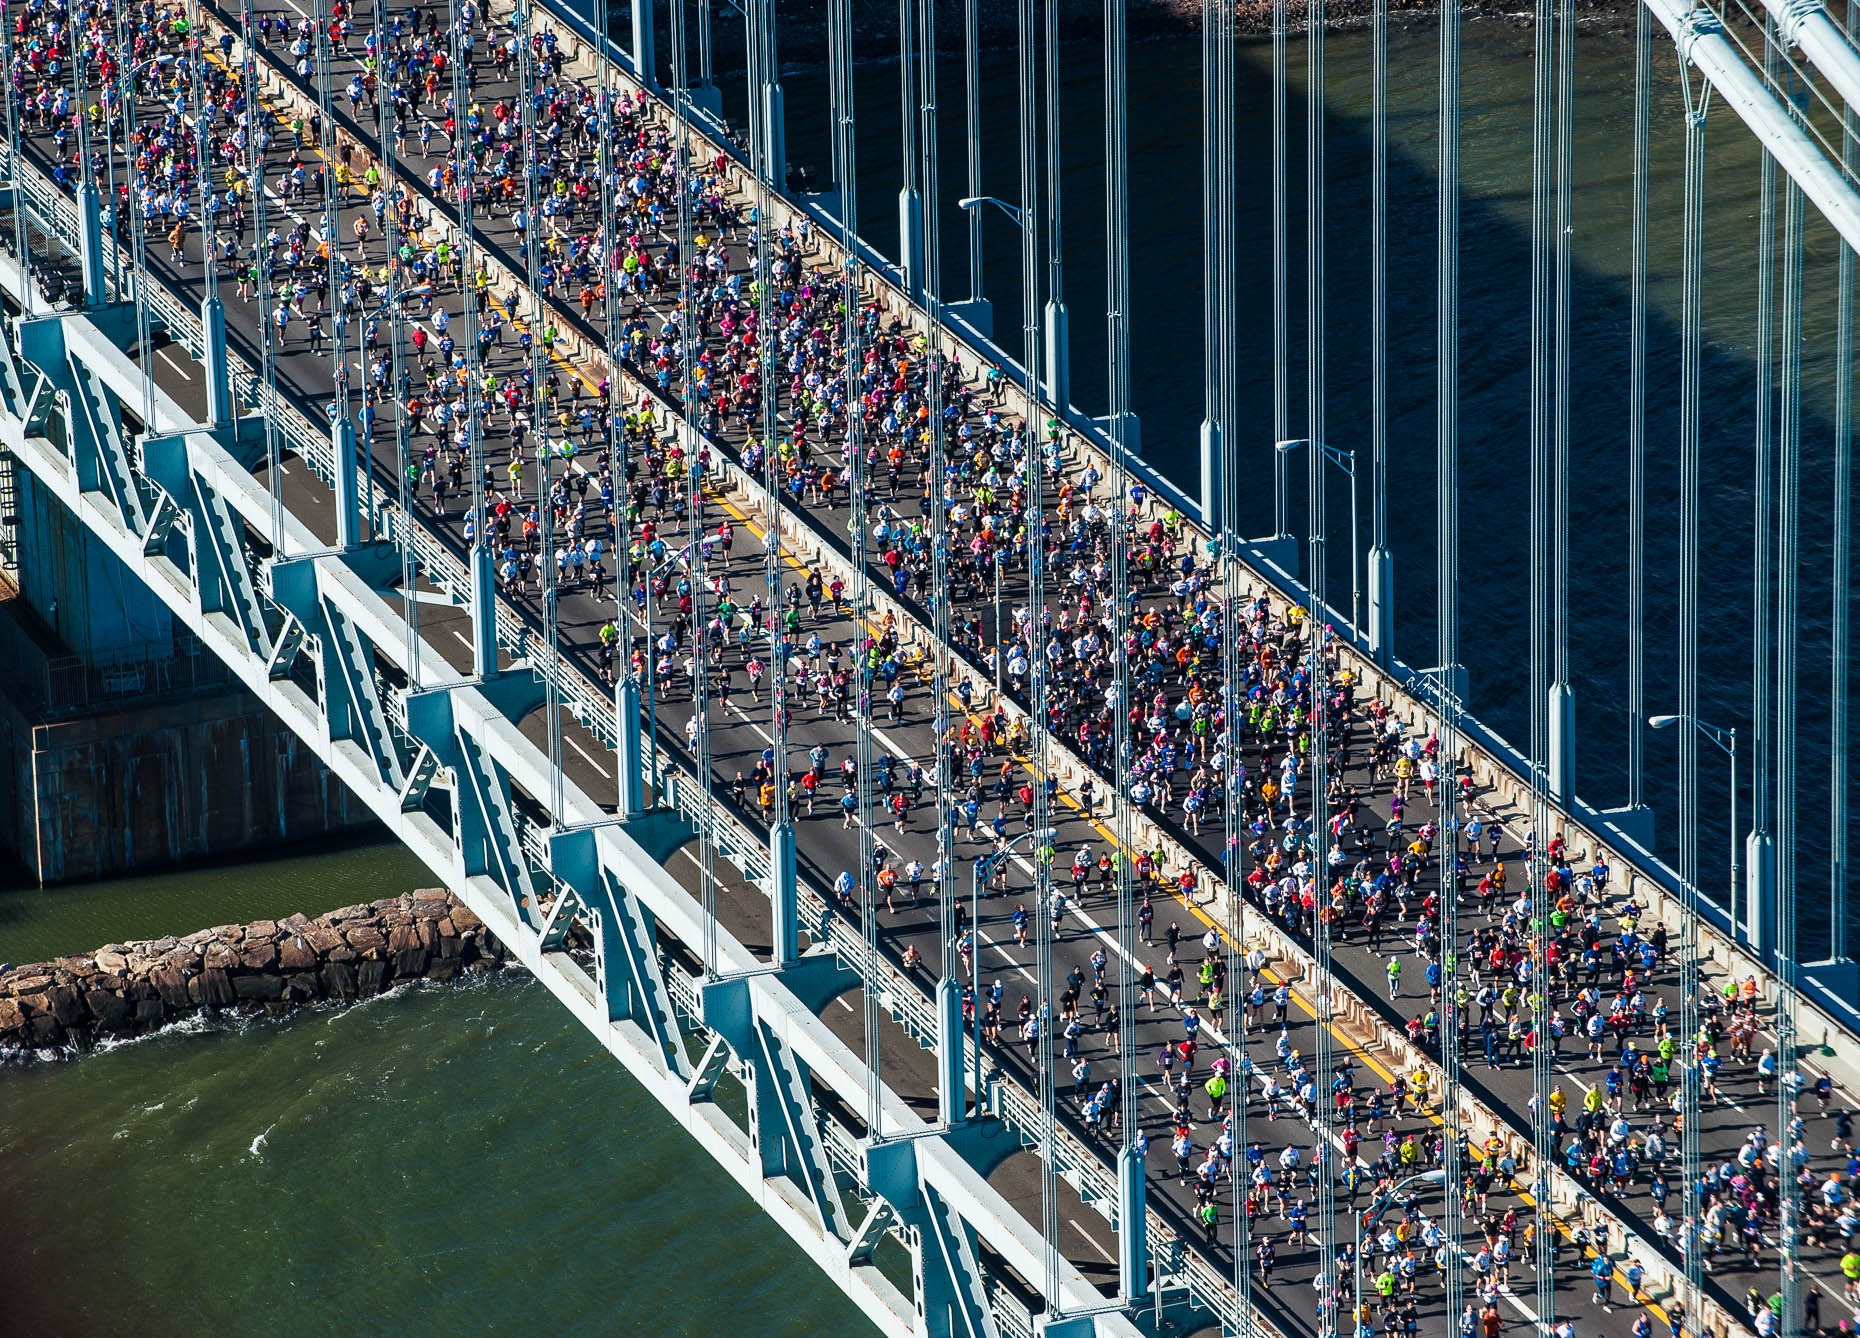 NYC Marathon Verazano Bridge from Helicopter